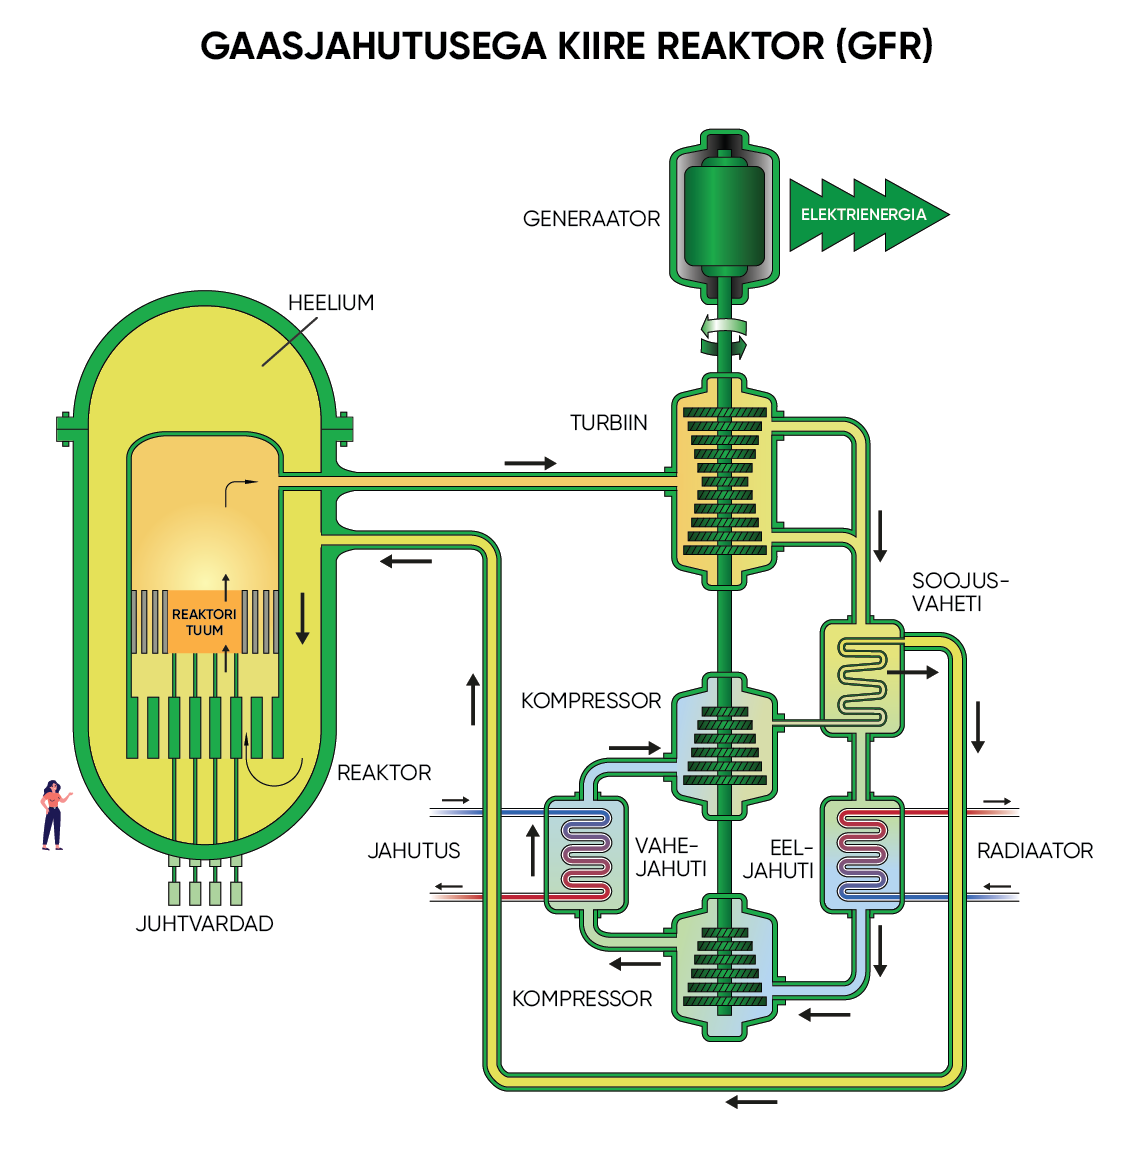 Gaasjahutusega kiirete neutronitega reaktor (GFR)